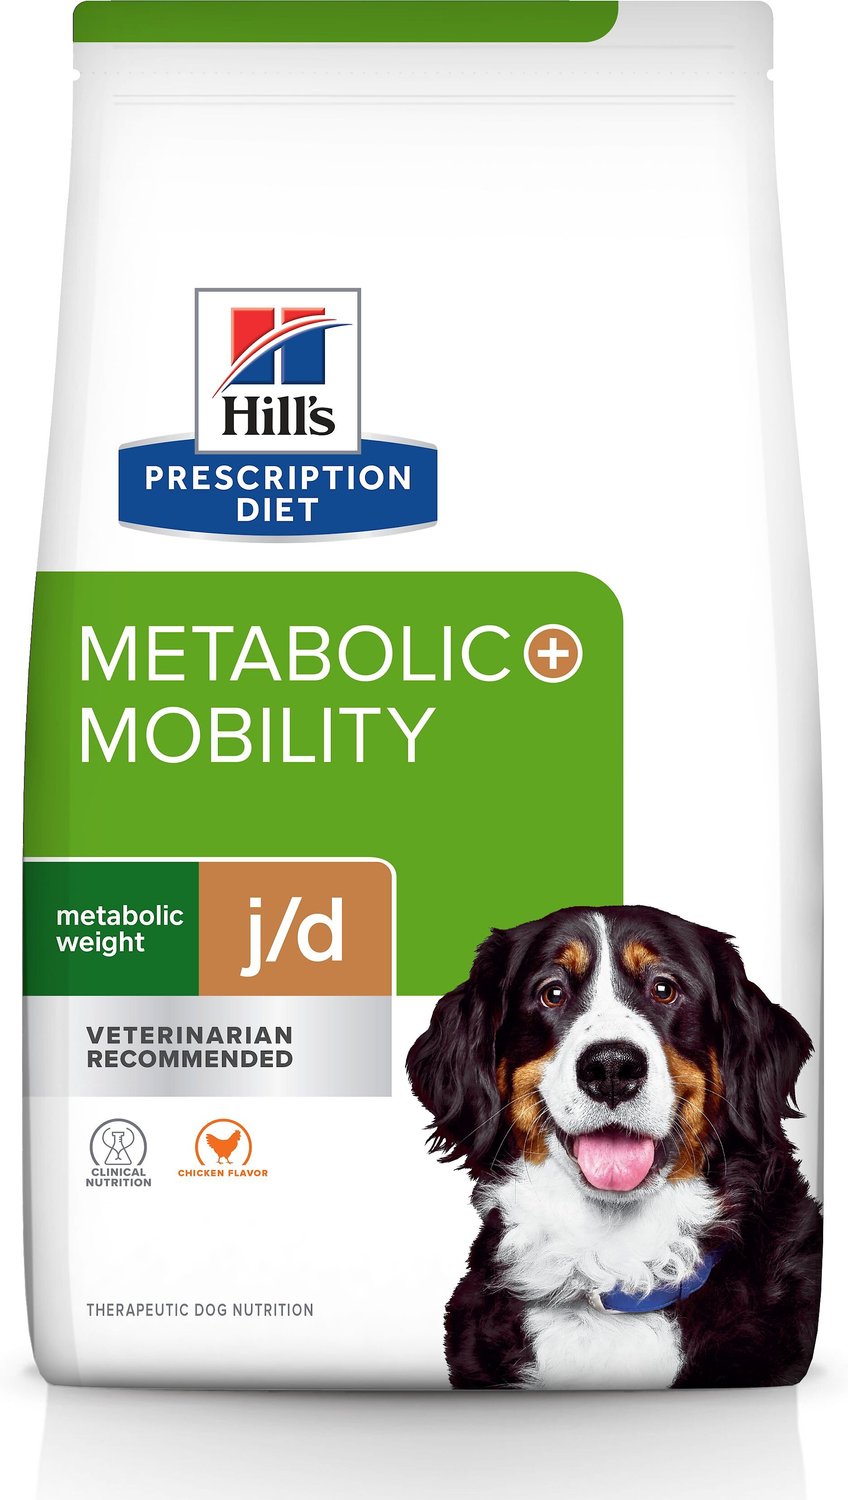 hills metabolic weight management dog food